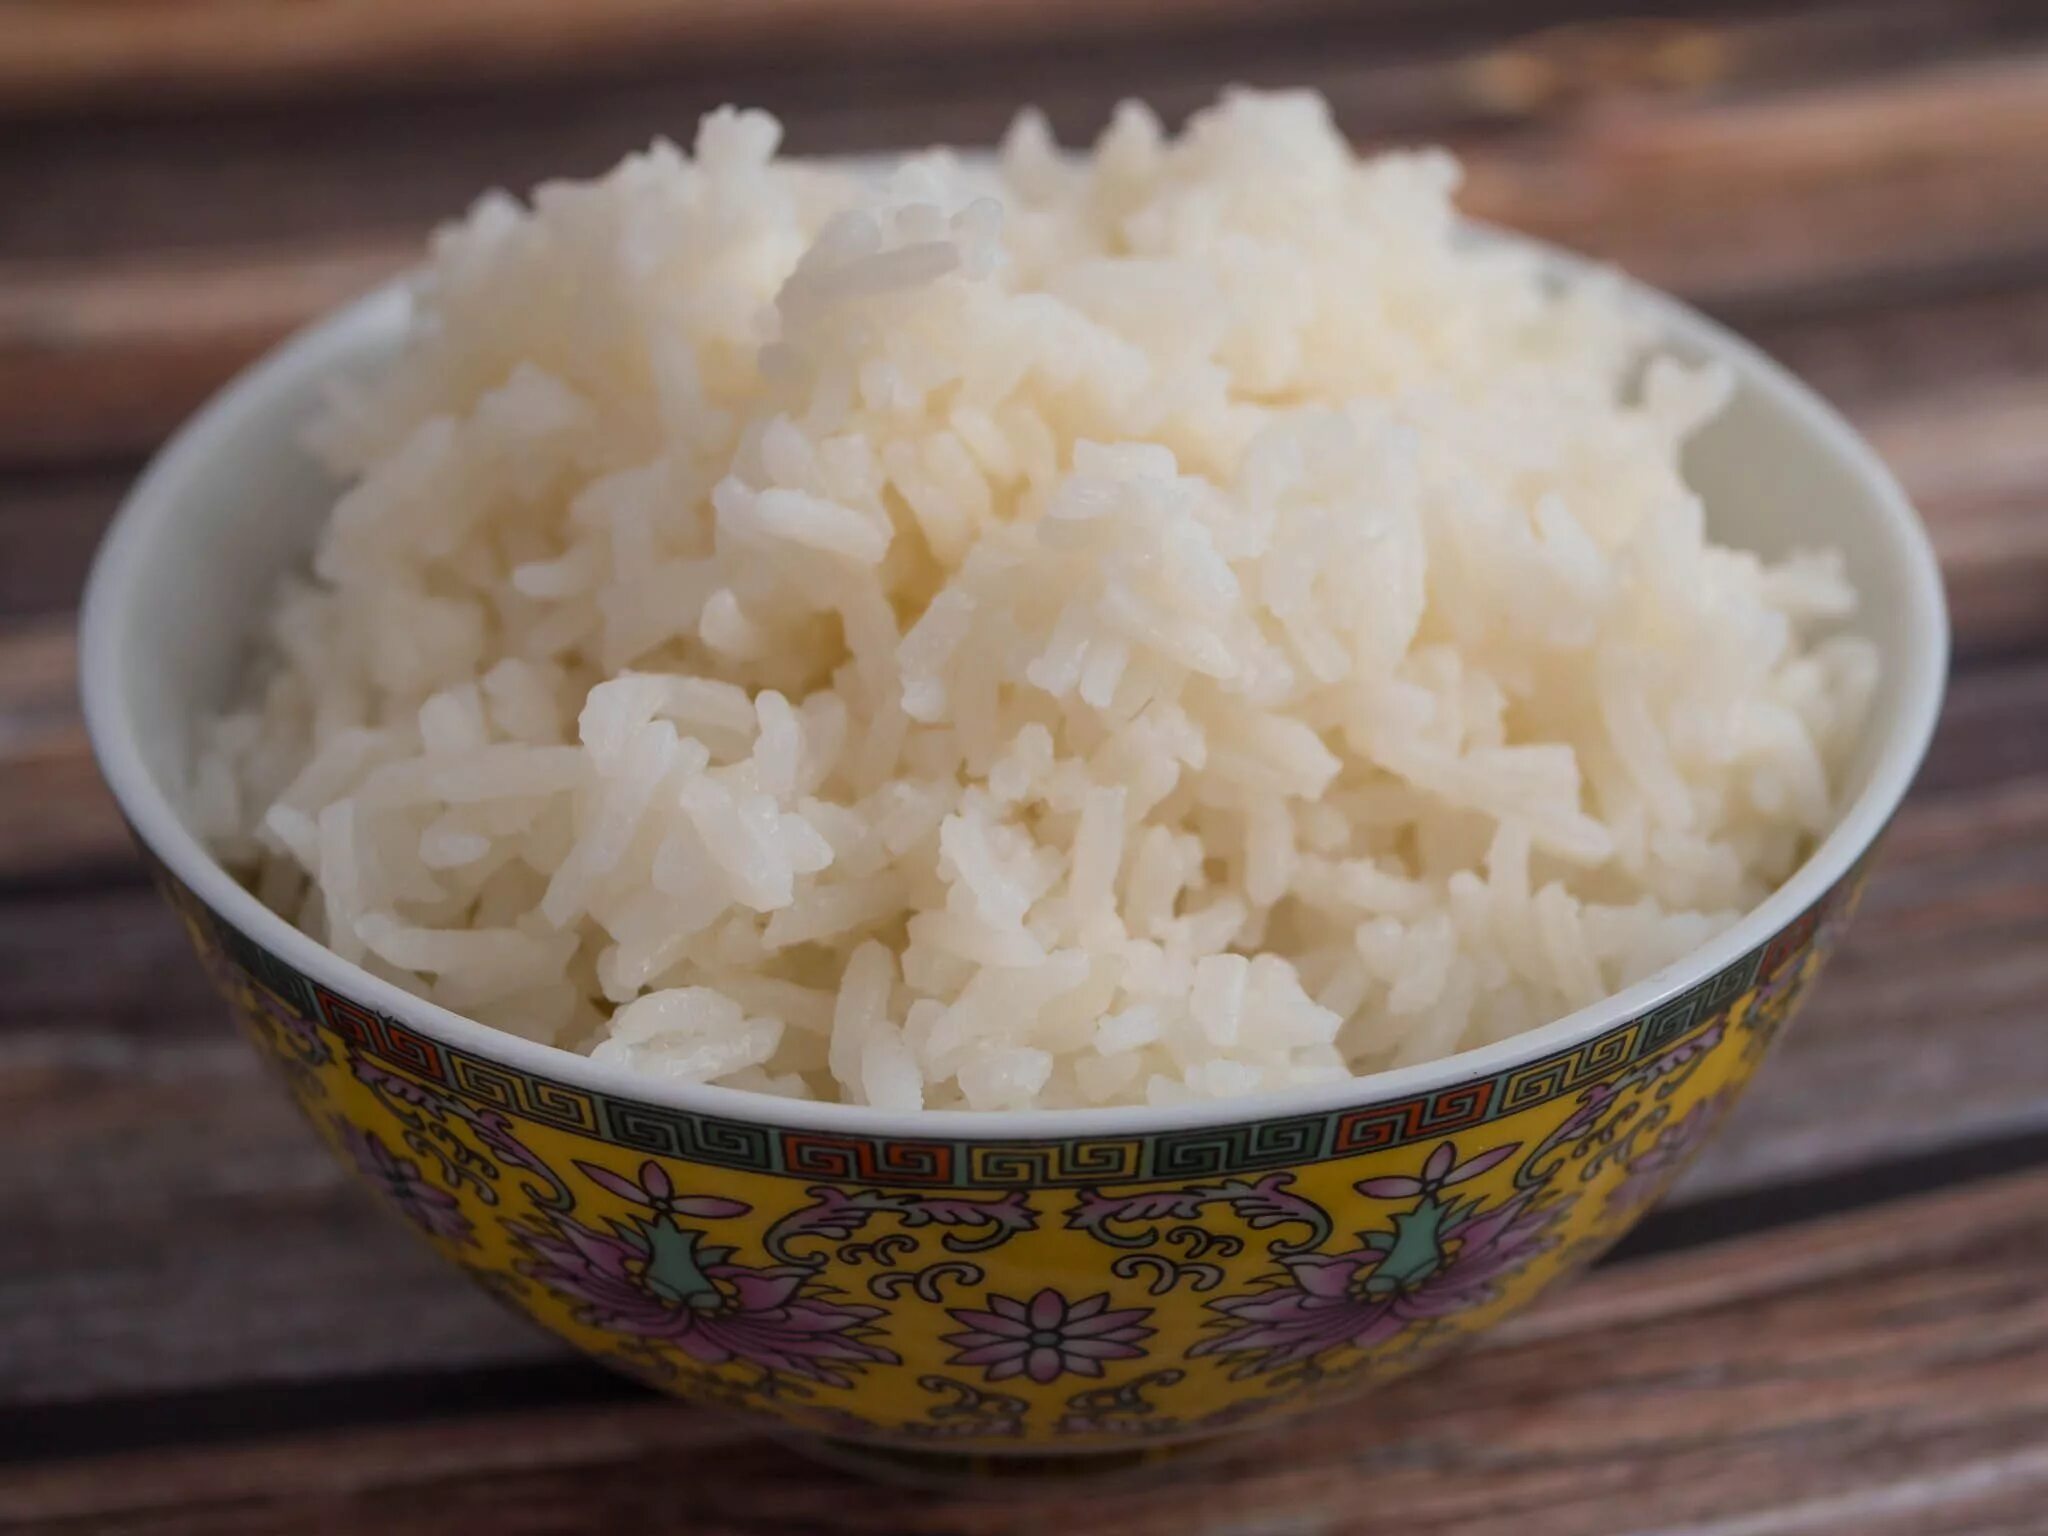 Much rice. White Rice. Pow Rice. Too much Rice.